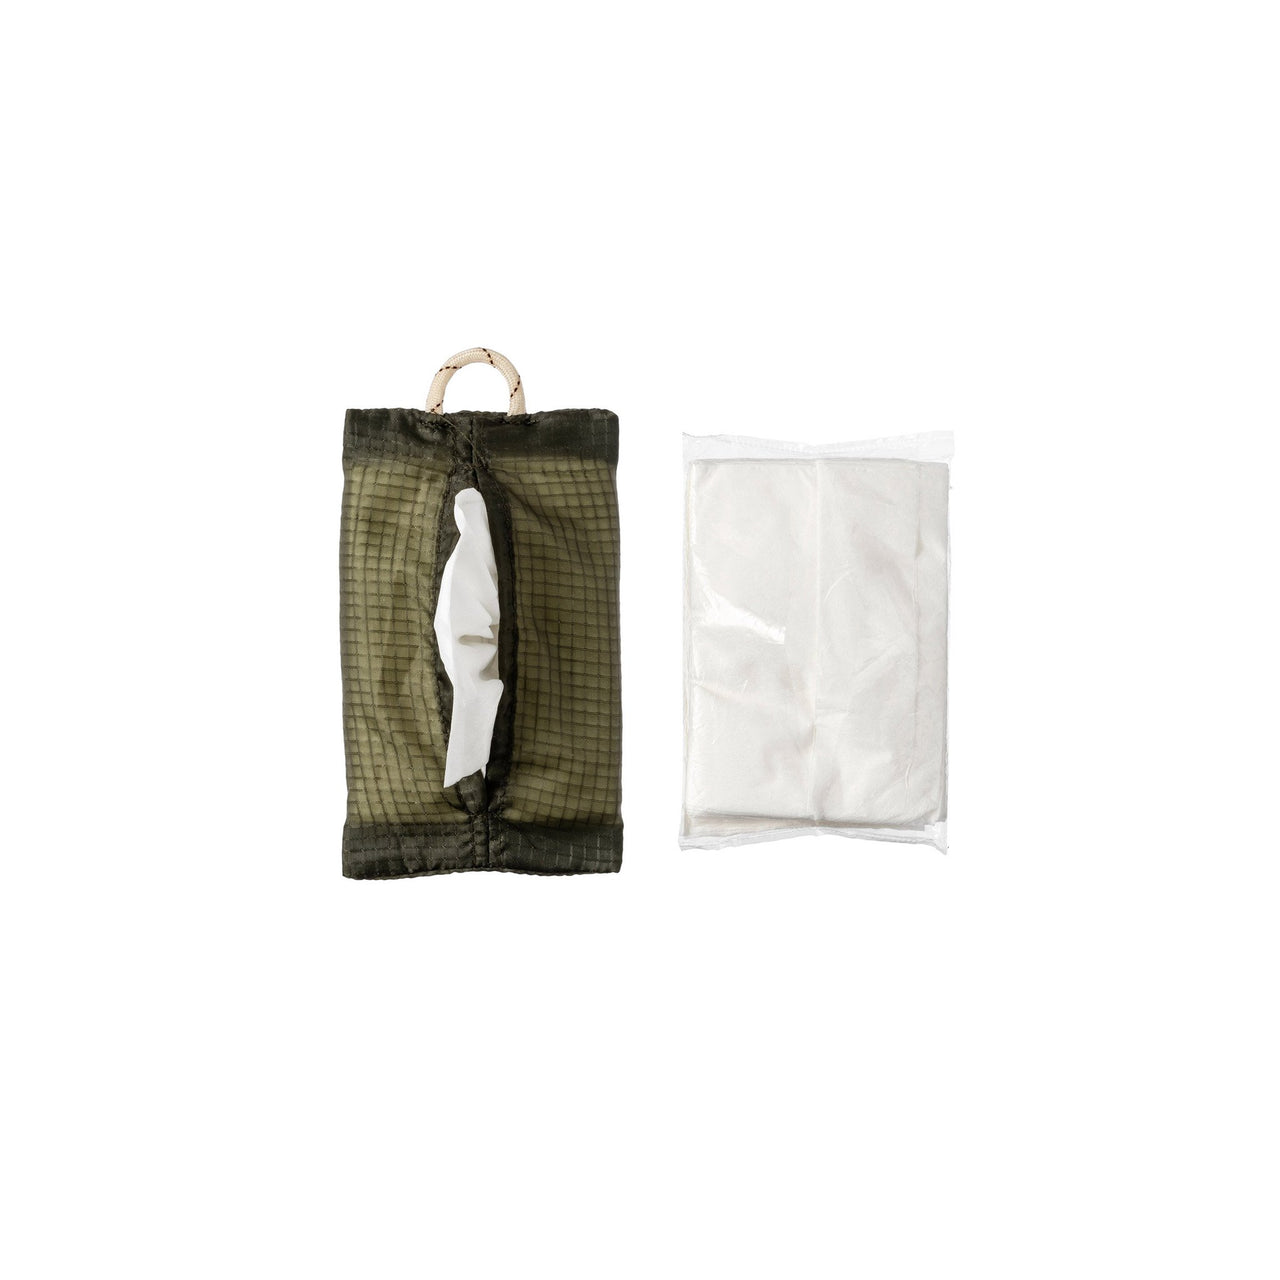 Drake General Store - PUEBCO Vintage Parachute Tissue Cover - Pocket Olive